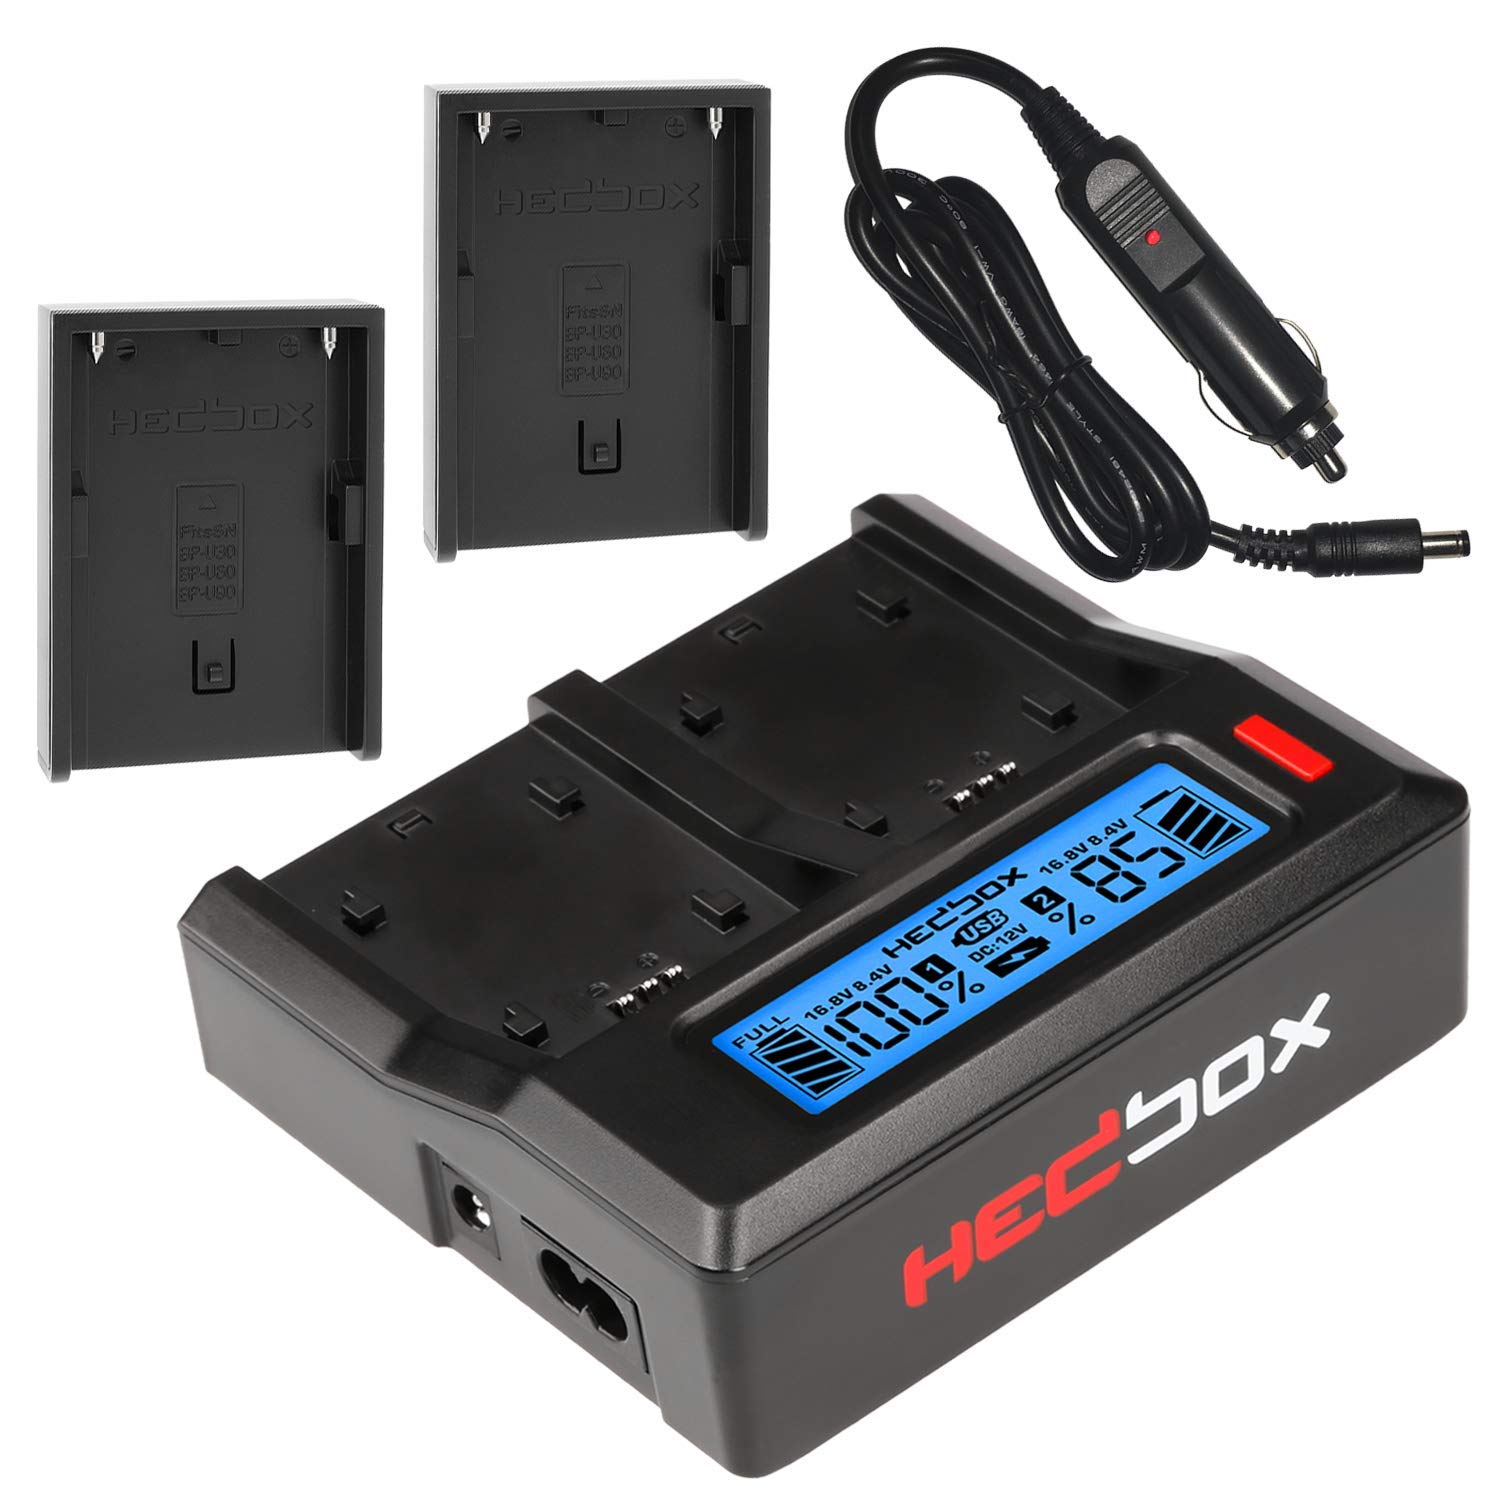 HEDBOX RP-DC50/DBPU - 2-Fach Ladegerät mit LCD für Sony BP- U30, U60, U90, und Hedbox HED-BP75D, HED-BP95D Akkus